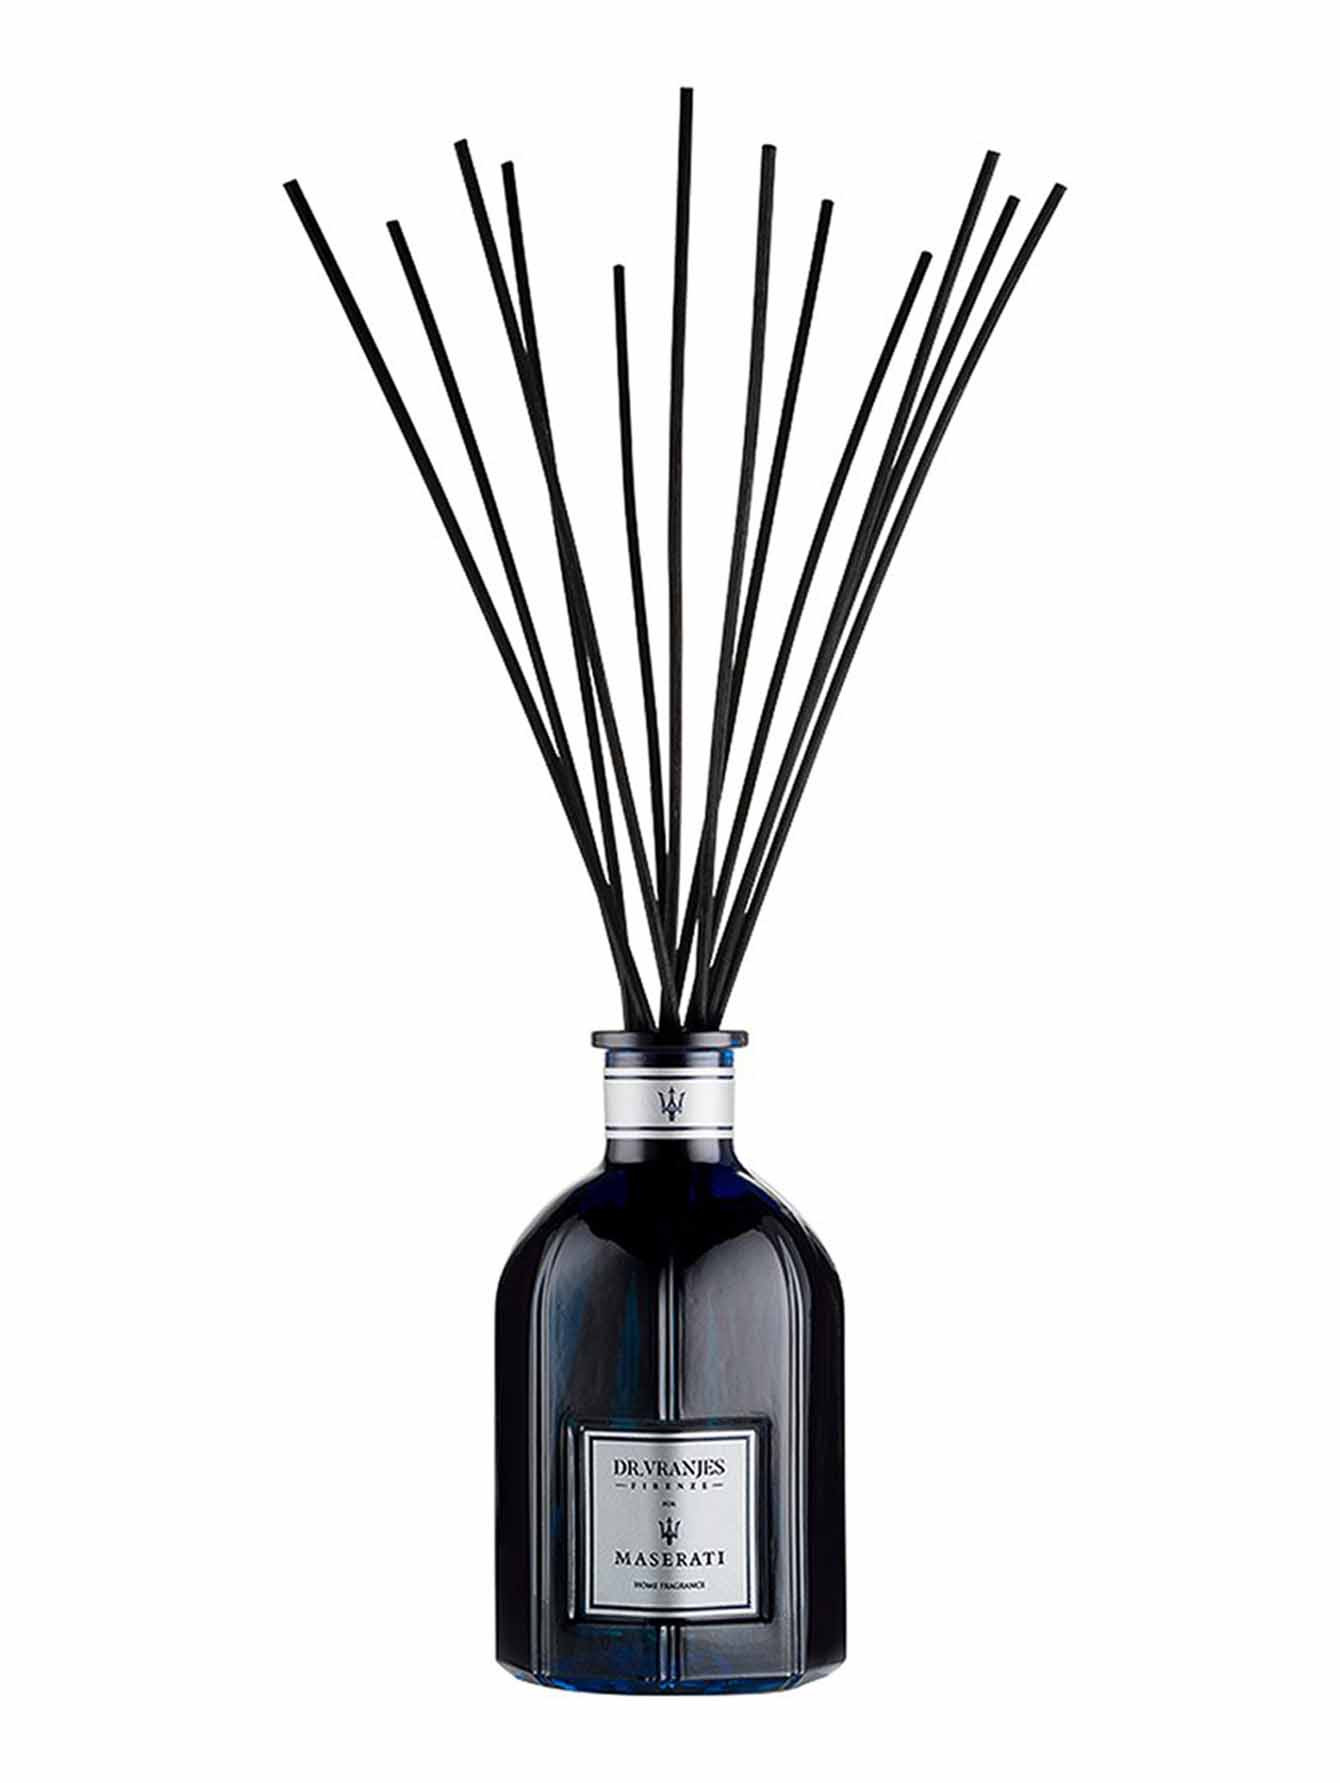 Ароматизатор воздуха "Maserati" - Home Fragrance, 500ml - Общий вид